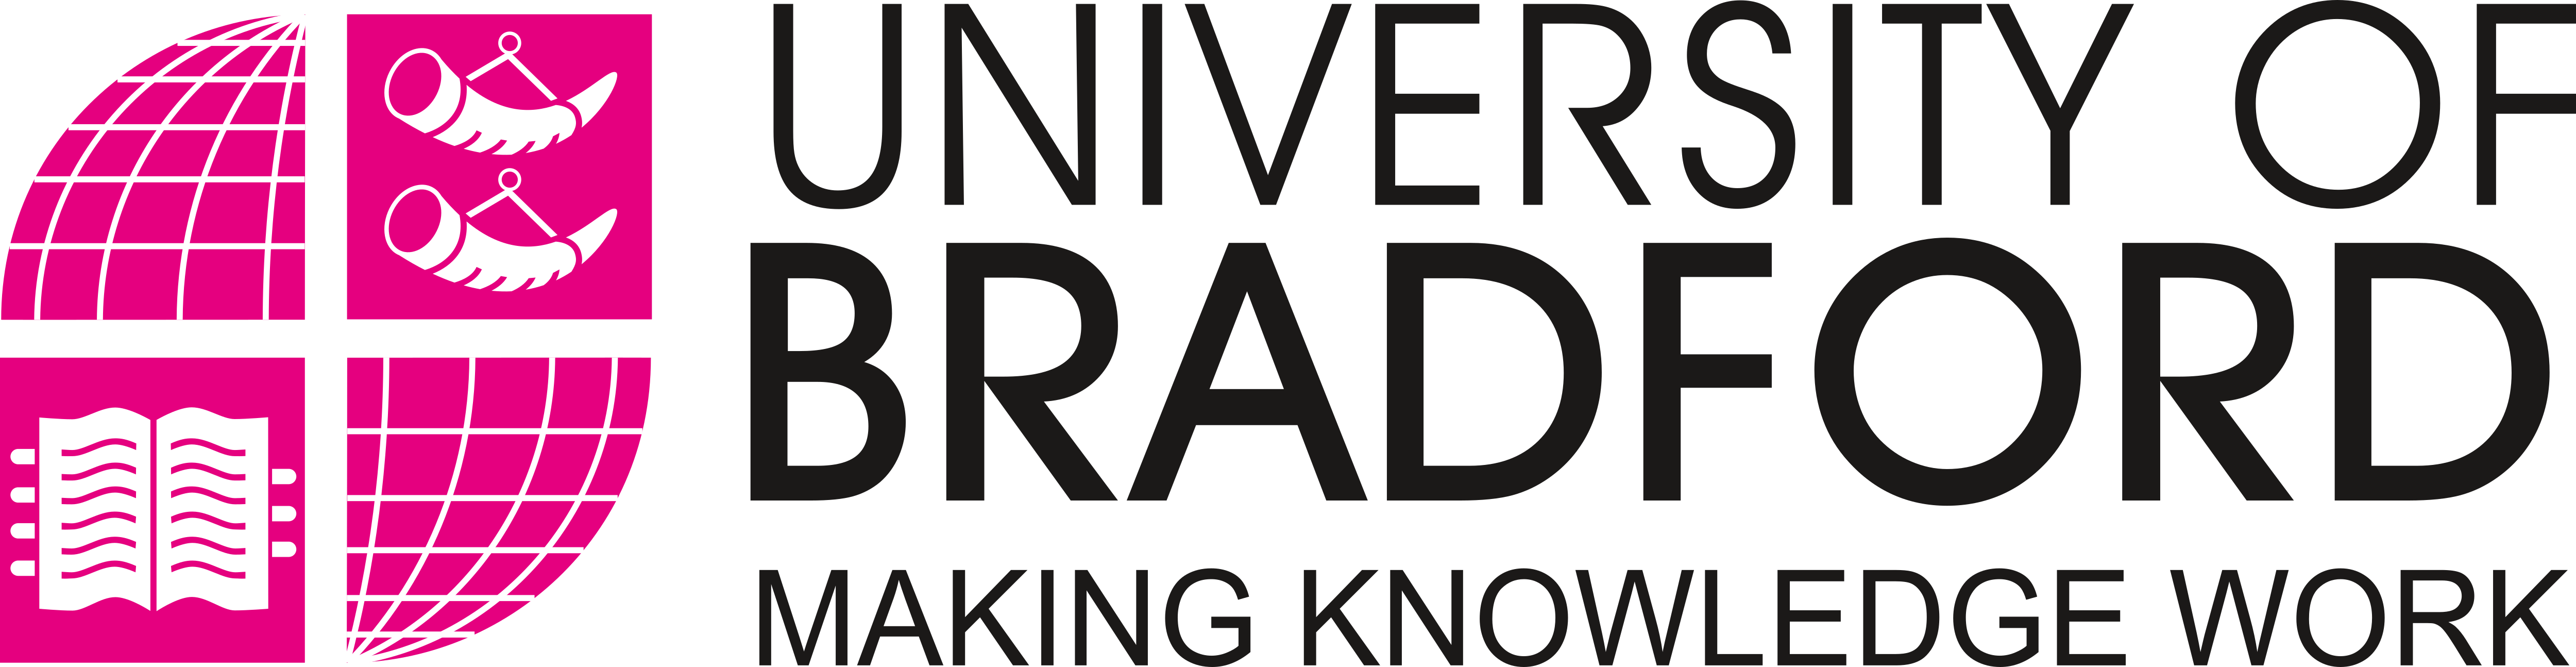 https://myscs.org/wp-content/uploads/2022/07/University_of_Bradford_Logo_old.png